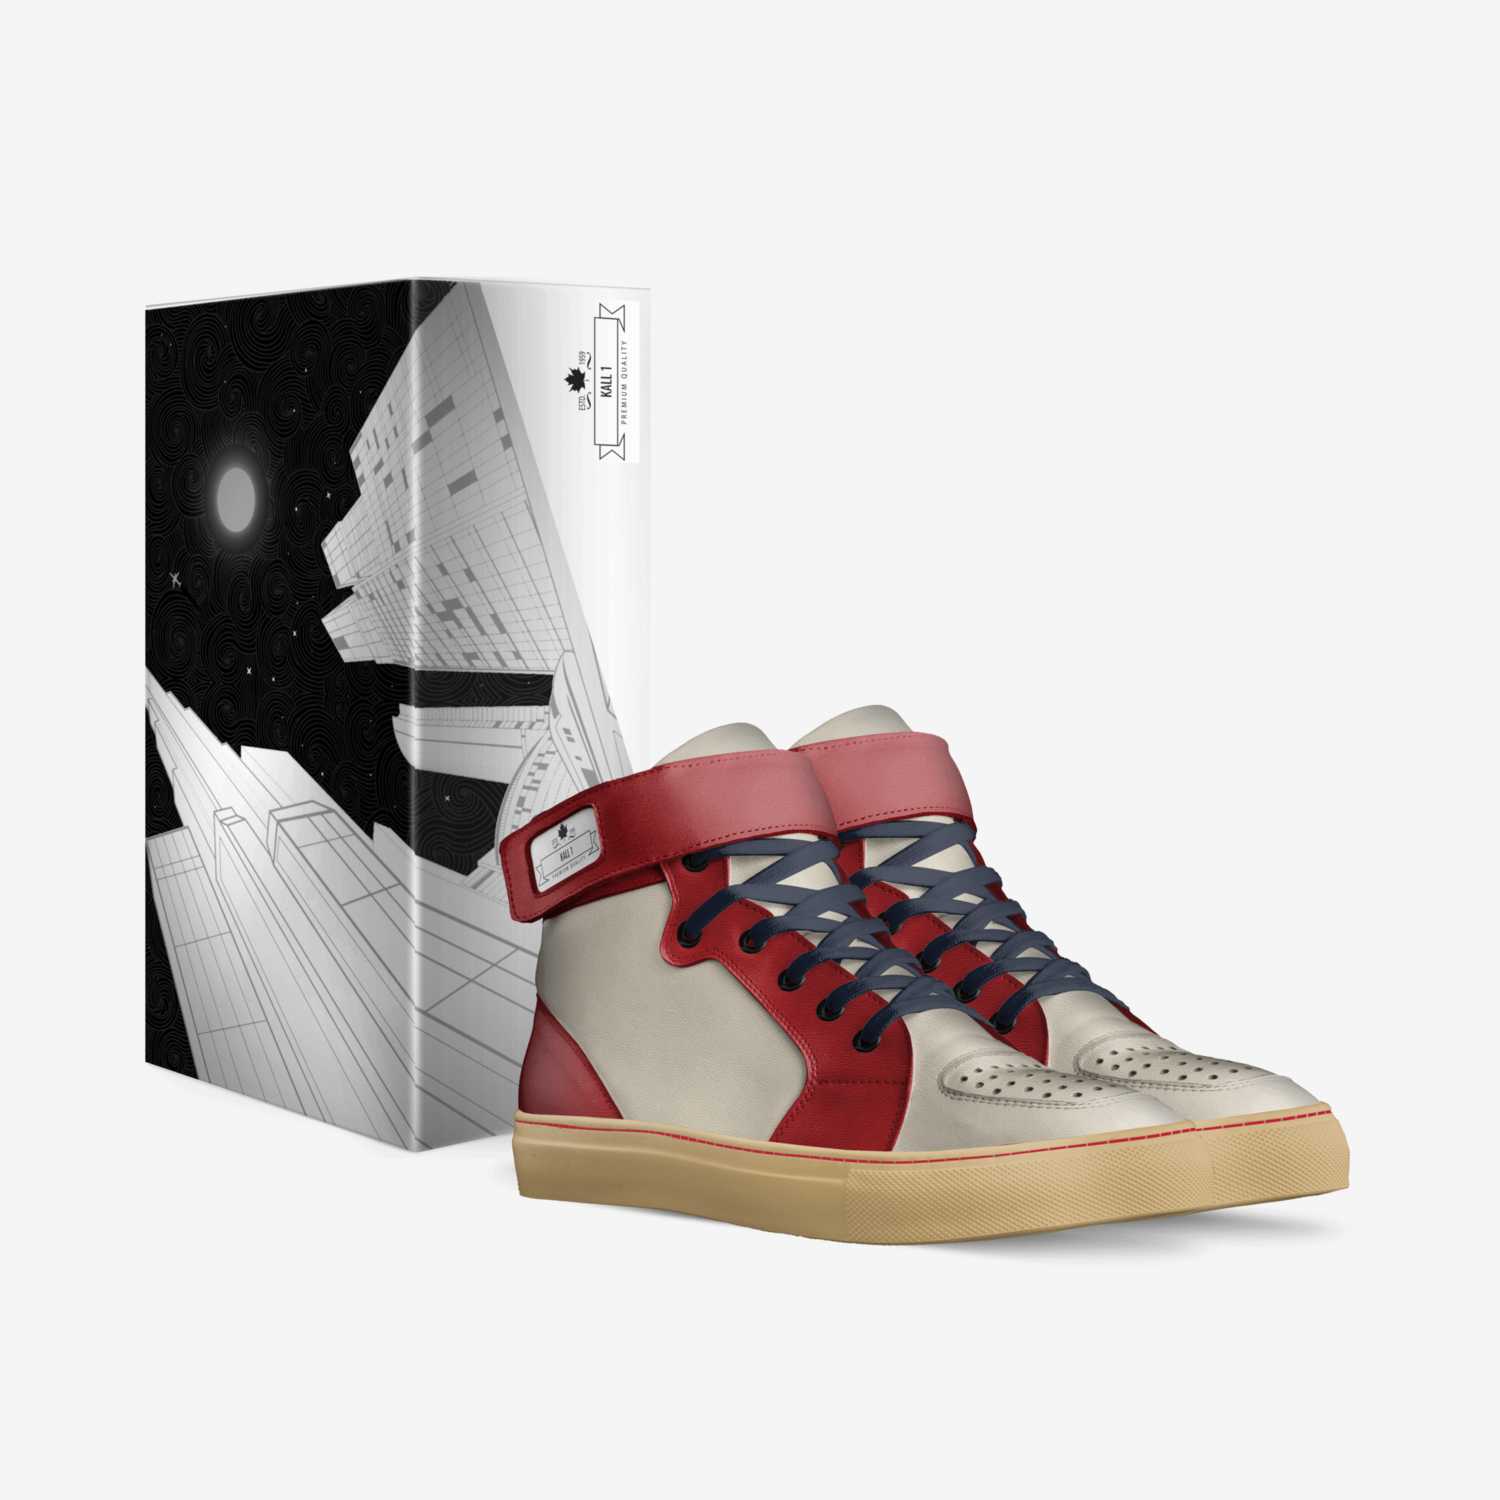 kall 1 custom made in Italy shoes by Kallum Coekin Reffell | Box view